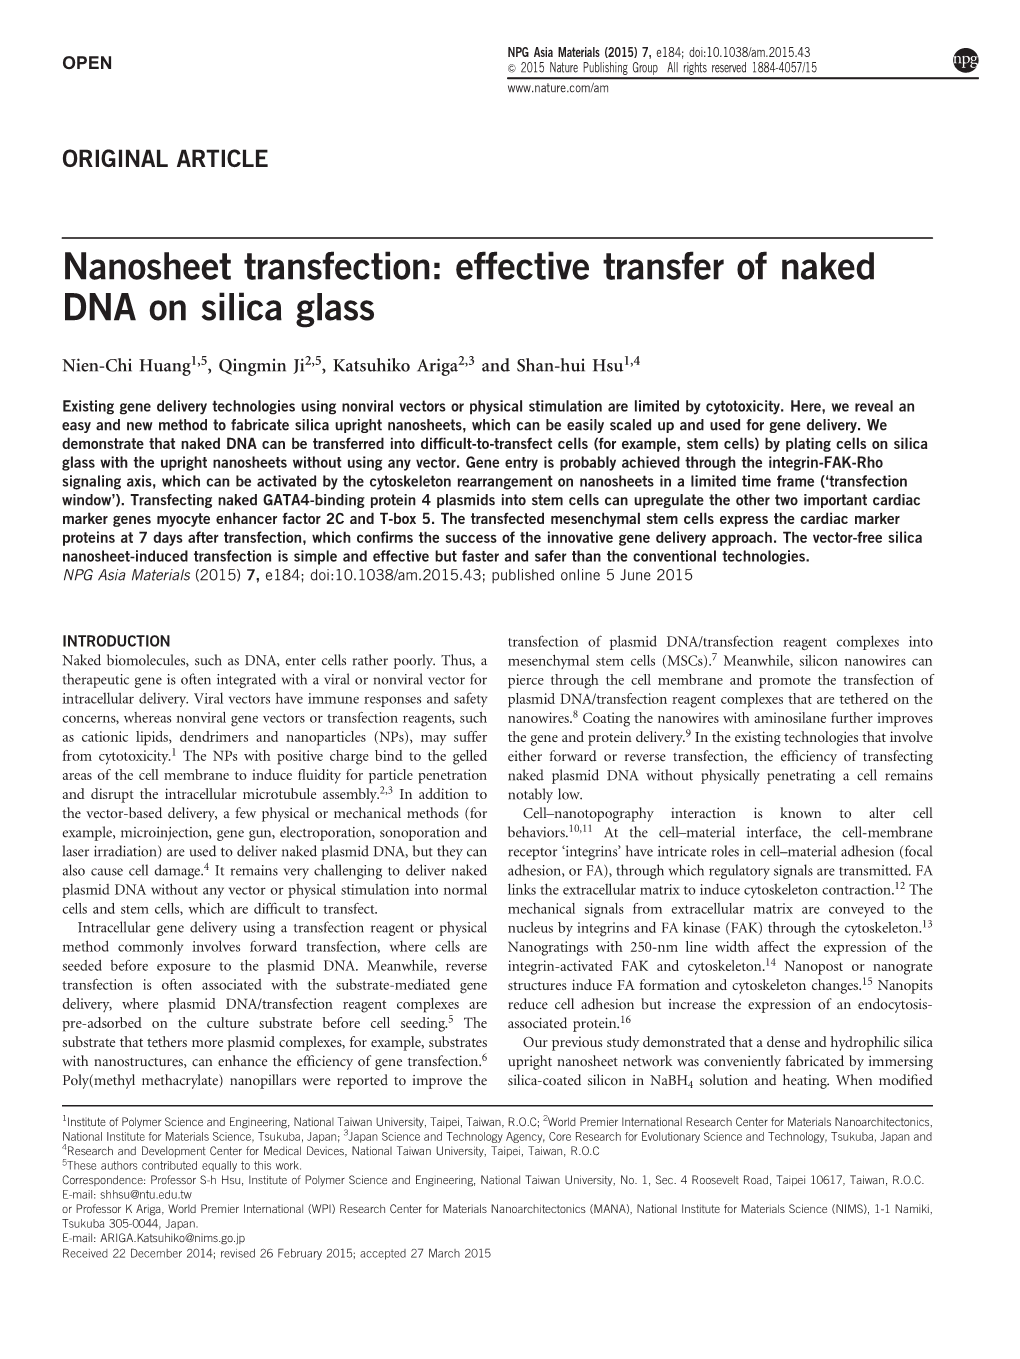 Nanosheet Transfection: Effective Transfer of Naked DNA on Silica Glass